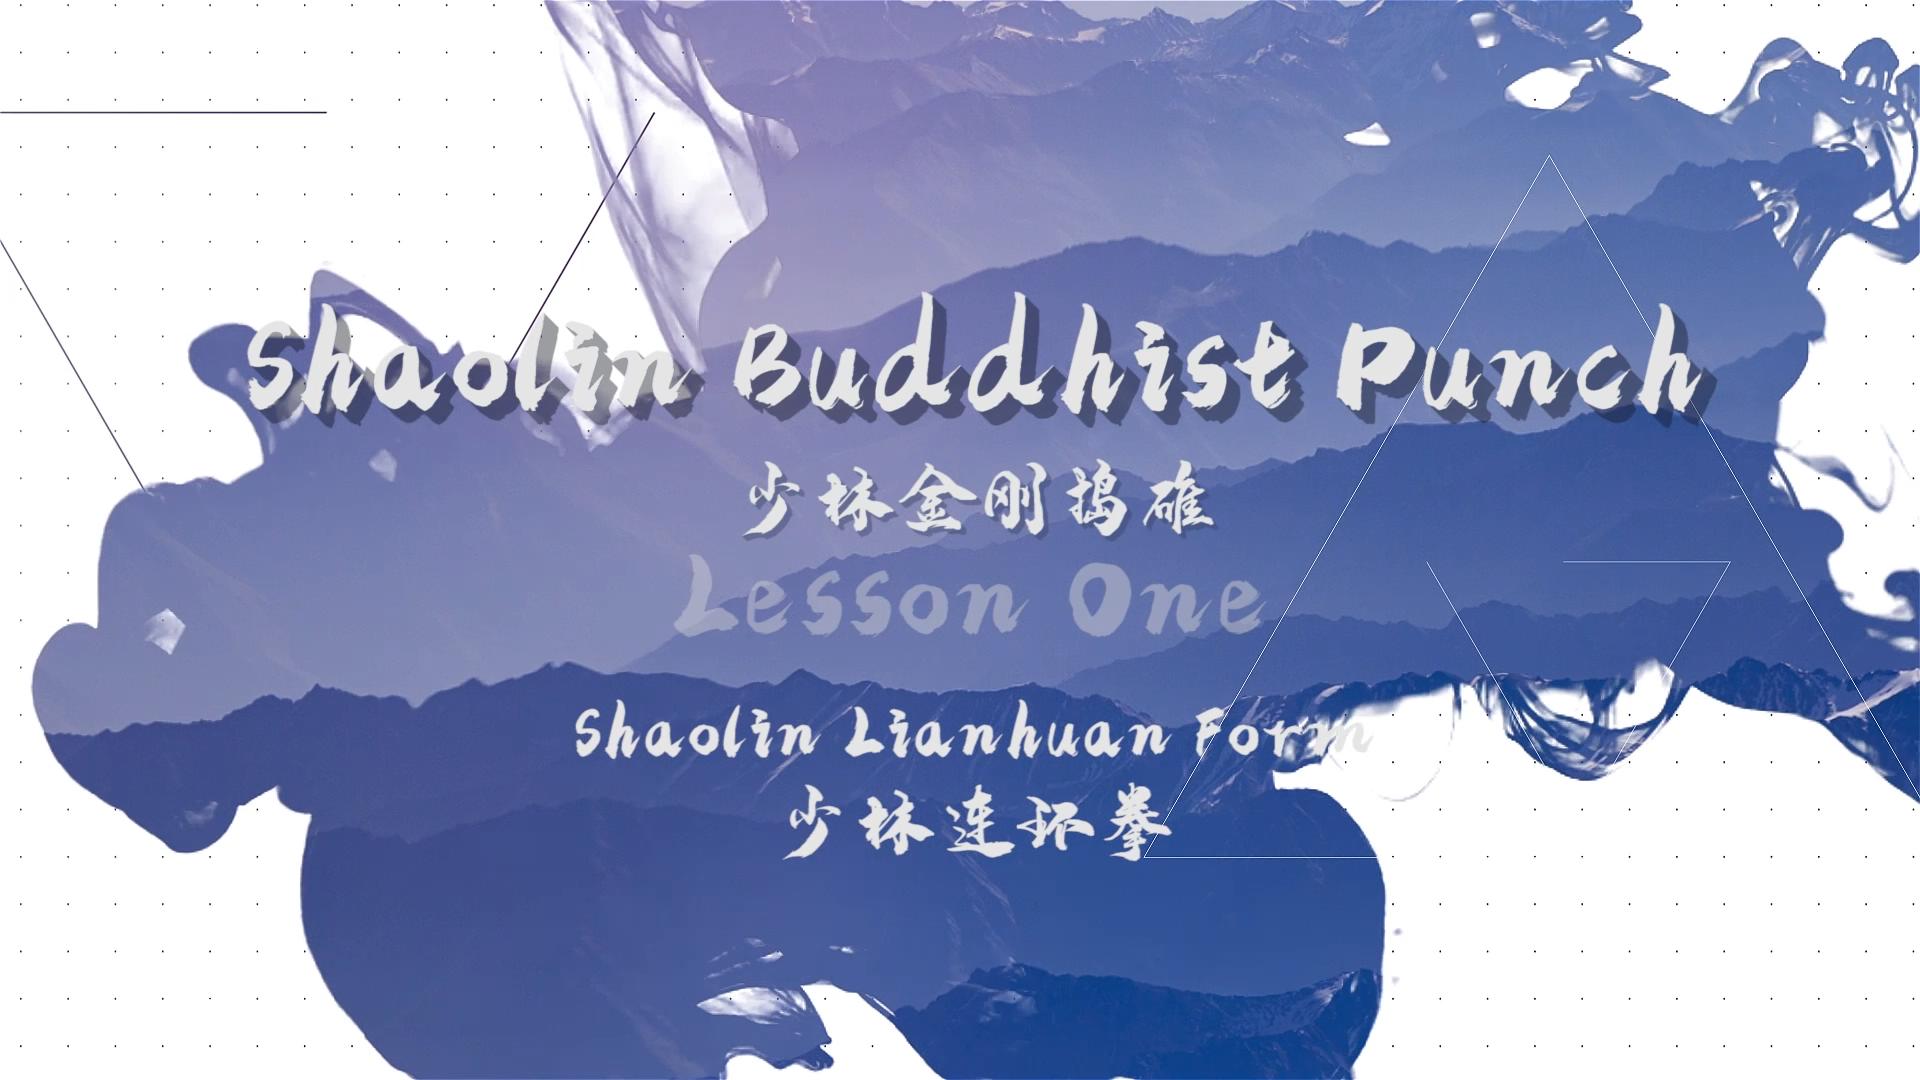 Shaolin Buddhist +Shaolin Lianhuan Form